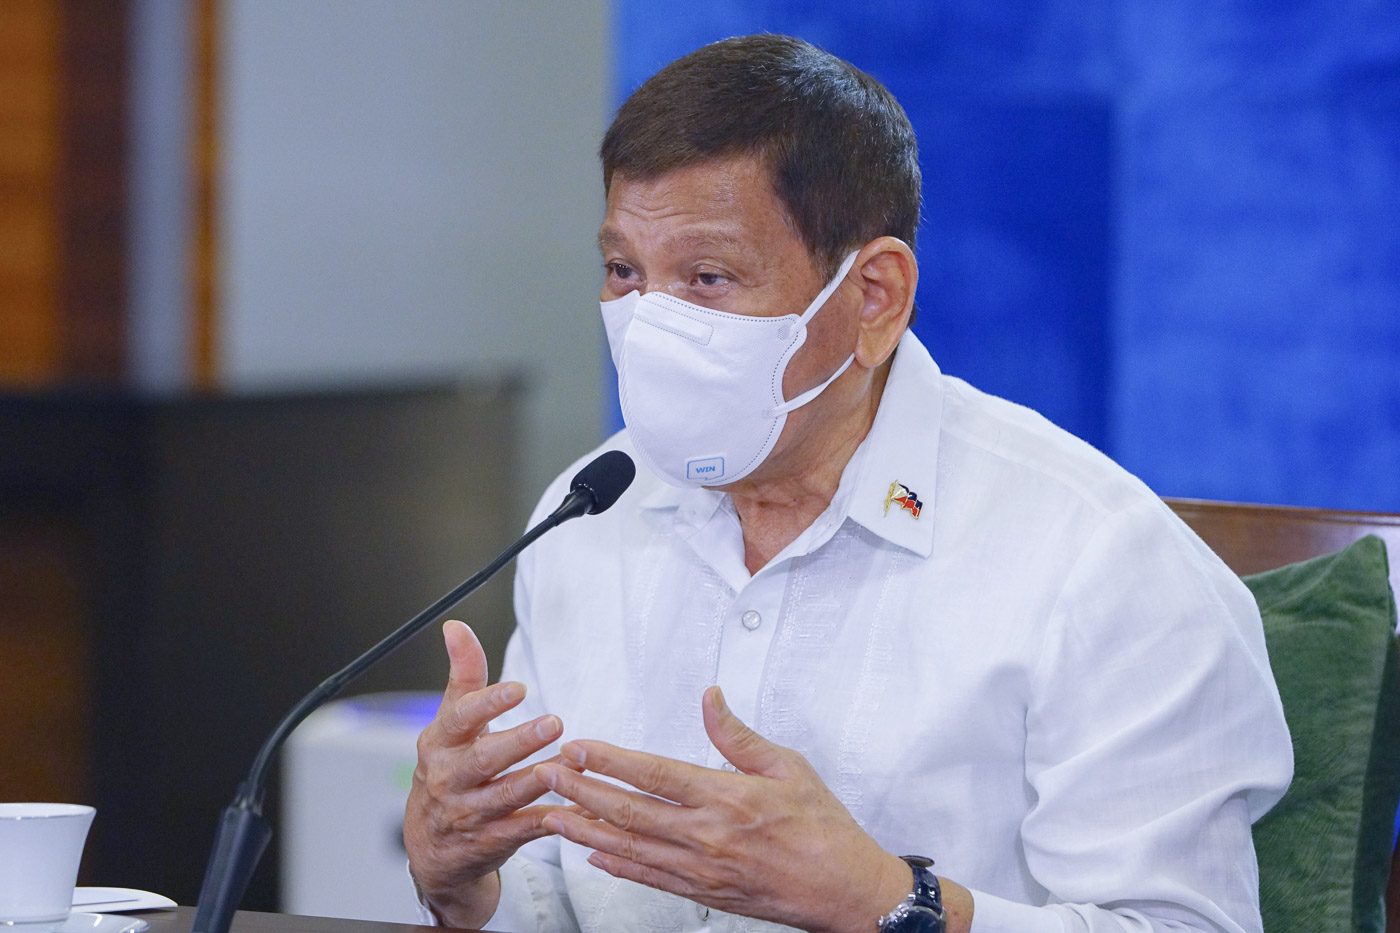 Duterte at Nikkei forum: Bigger nations shouldn’t exploit smaller ones